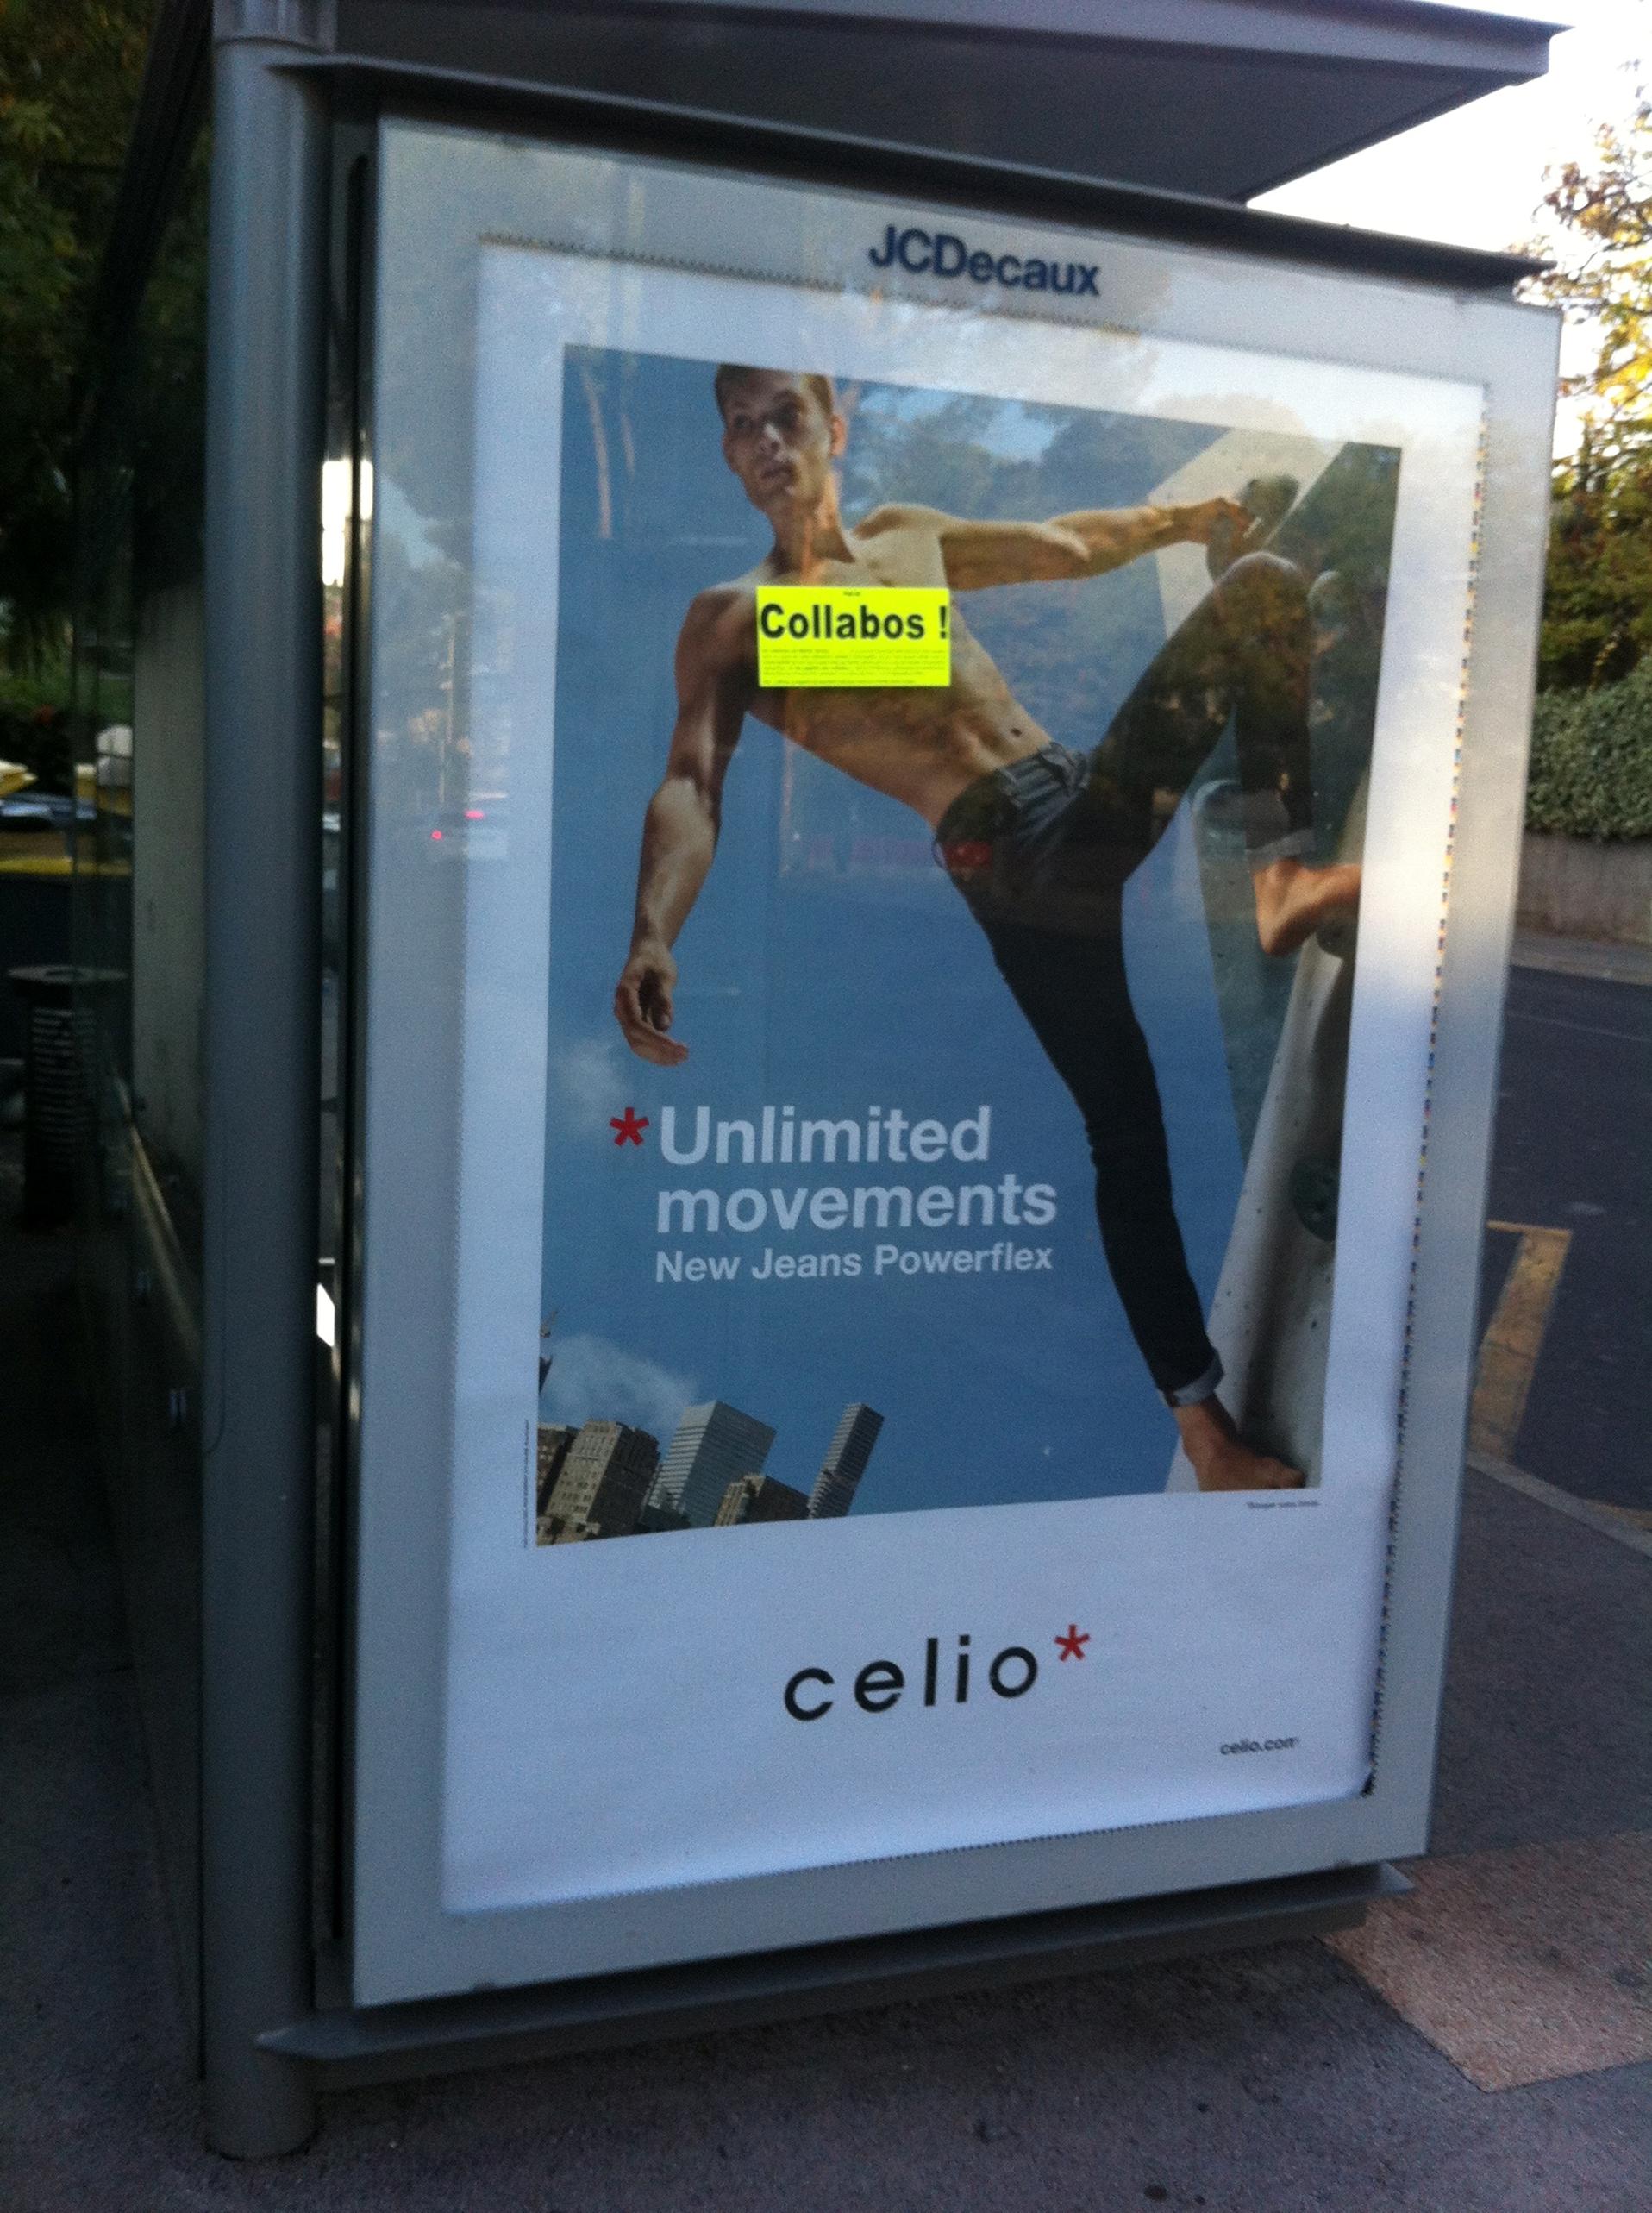 Celio, Unlimited-movements